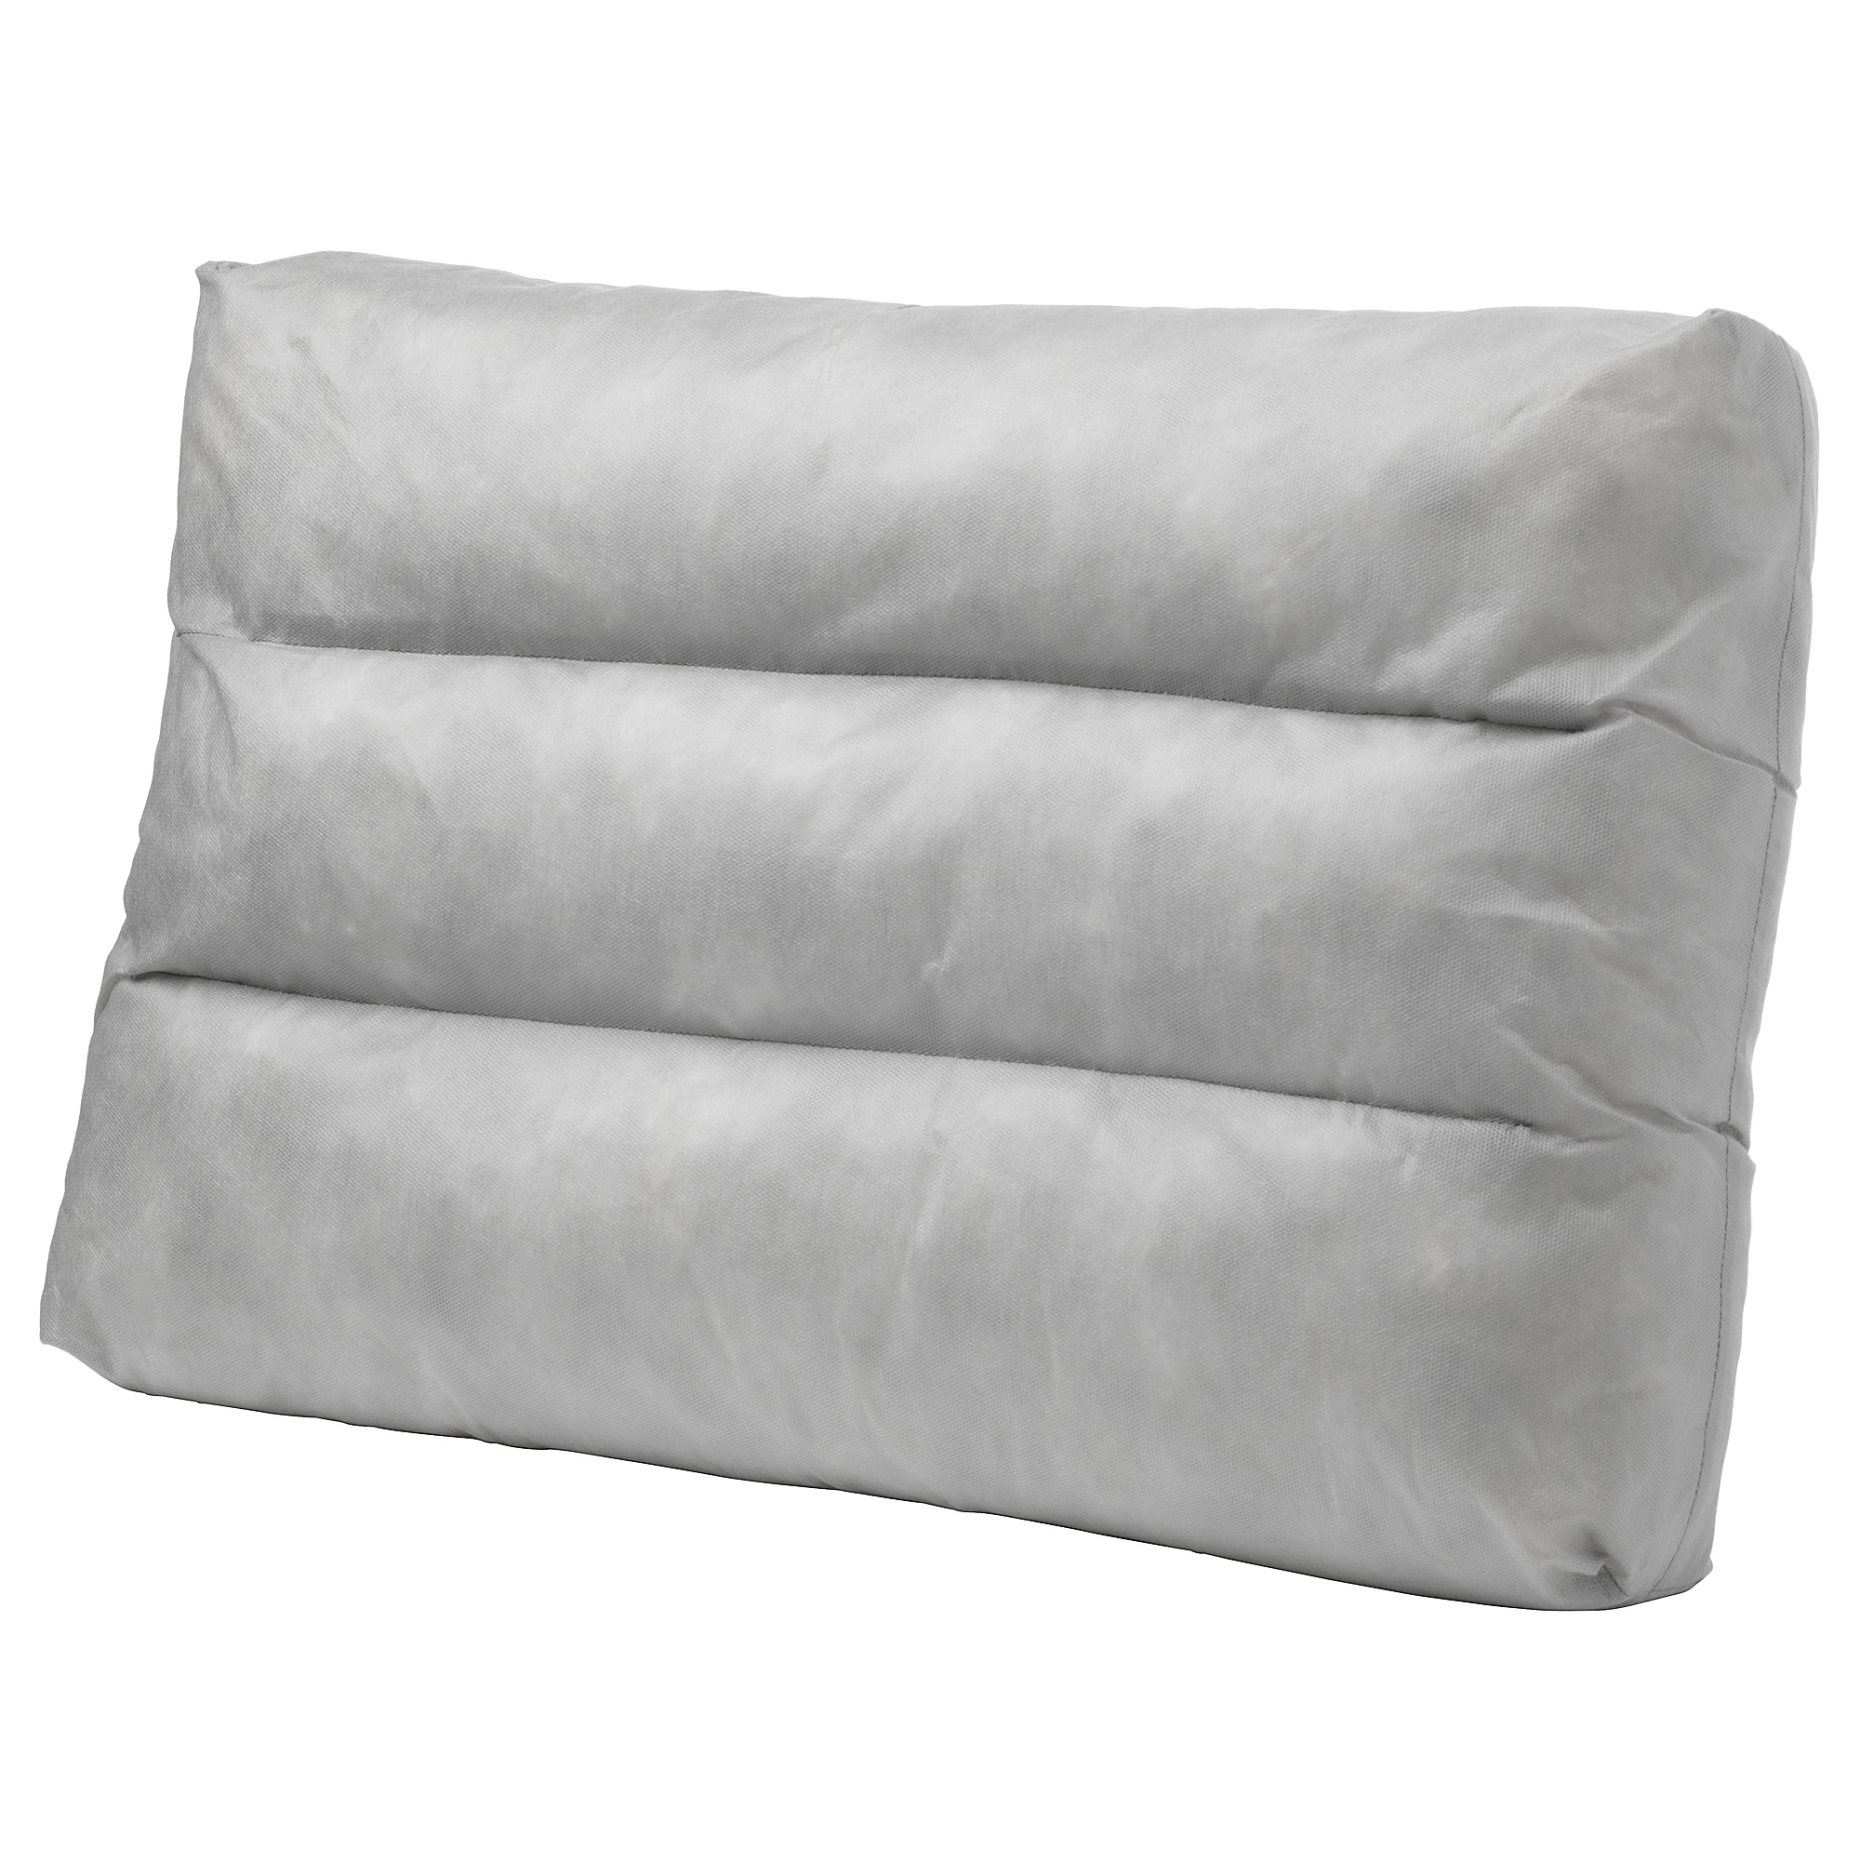 DUVHOLMEN, inner cushion for back cushion,outdoor, 103.918.33